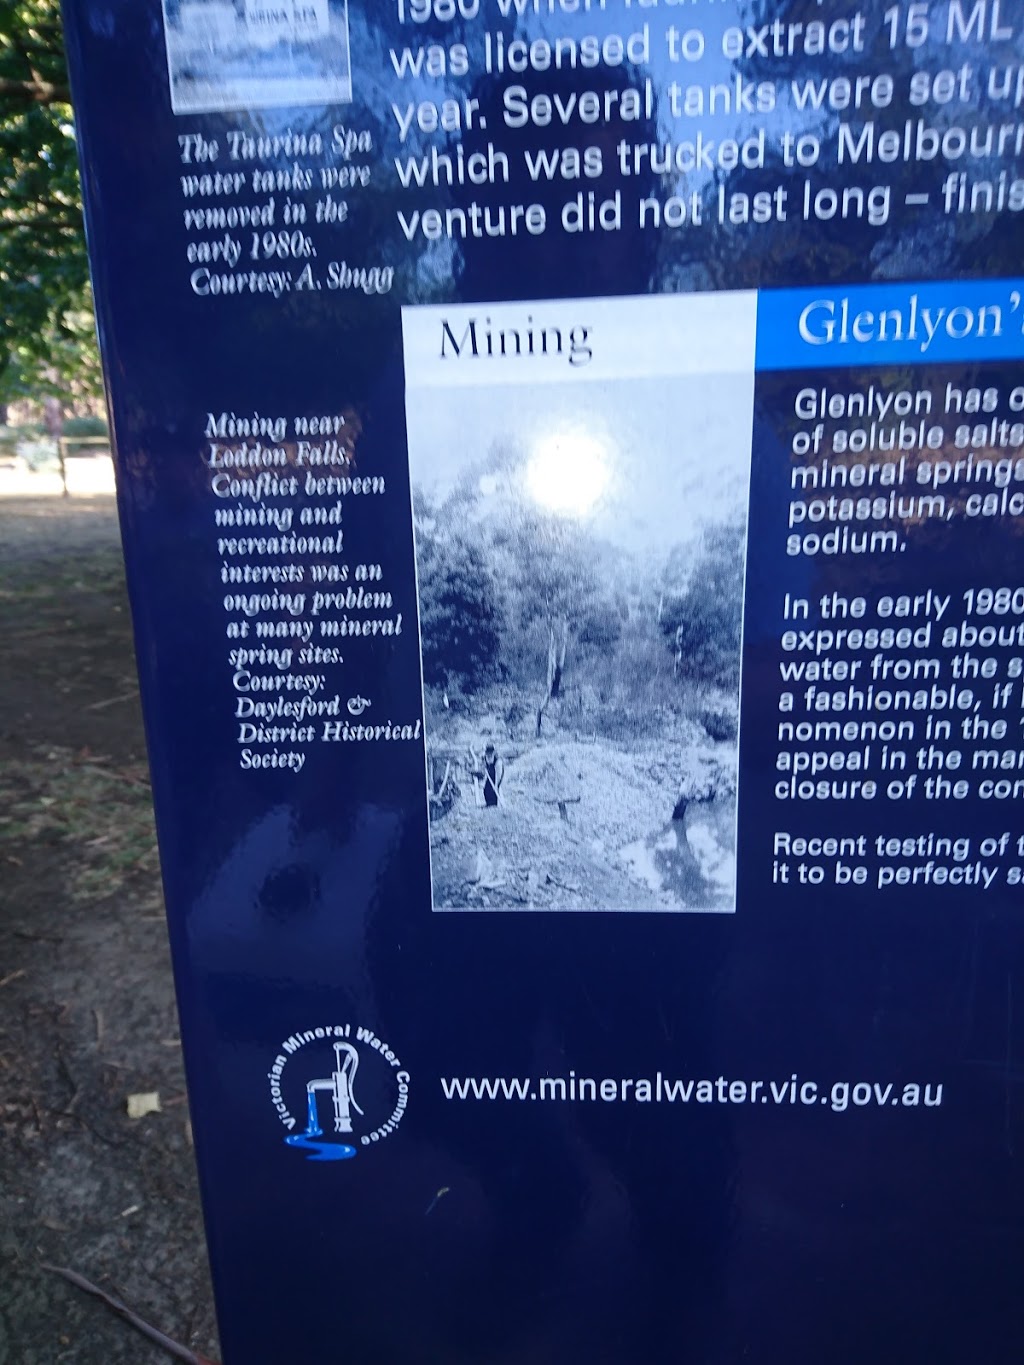 Glenlyon Mineral Springs (Pump) & Picnic Ground | Glenlyon VIC 3461, Australia